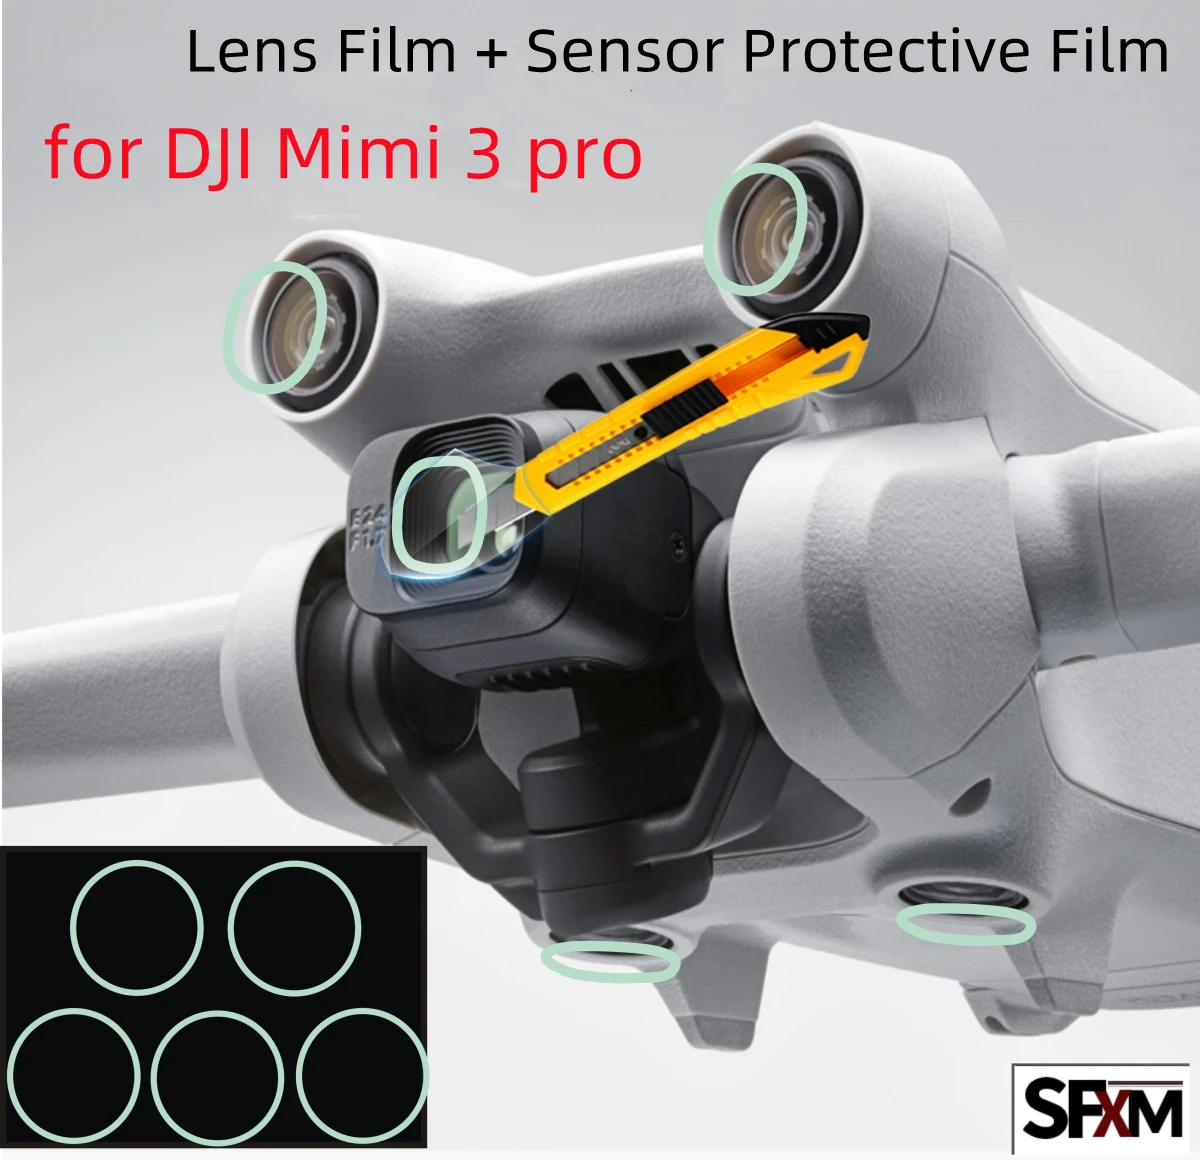 Protective Film for DJI Mini 3 Pro Sensor Protective Film + Lens Film Anti-scratch Anti-Bump for DJI Mini 3 Pro Accessories